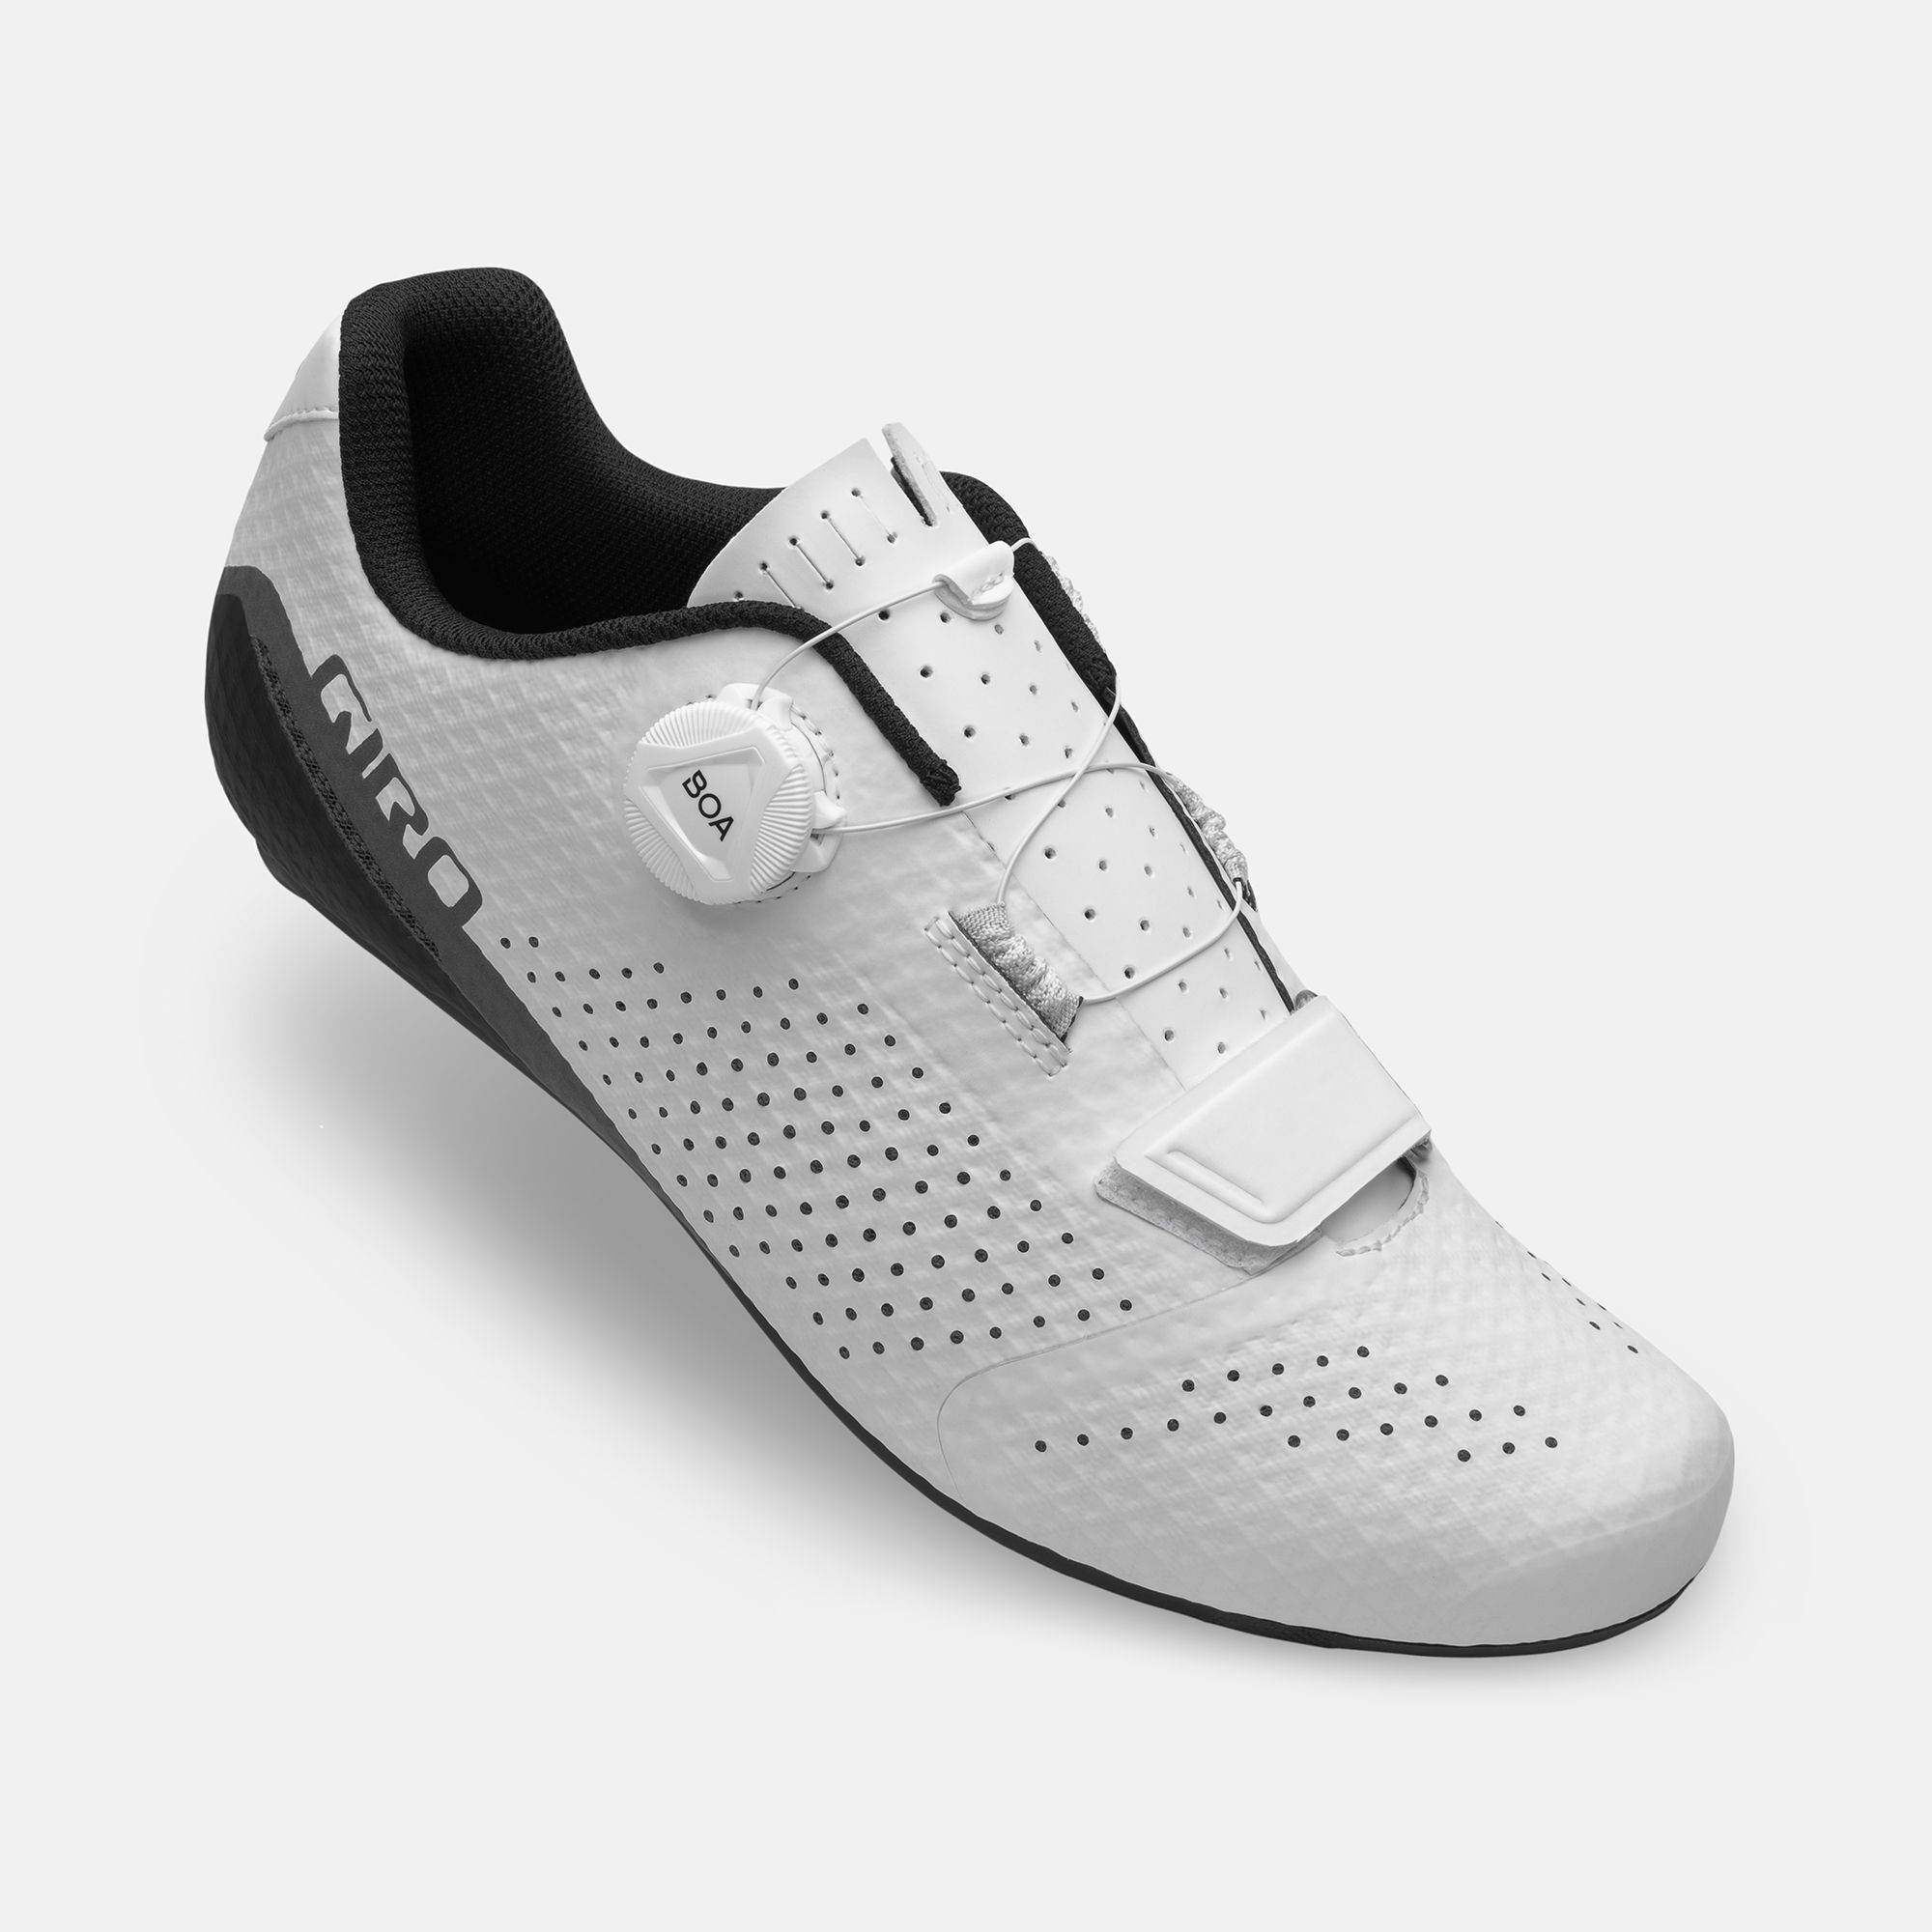 Cadet Shoe | Giro